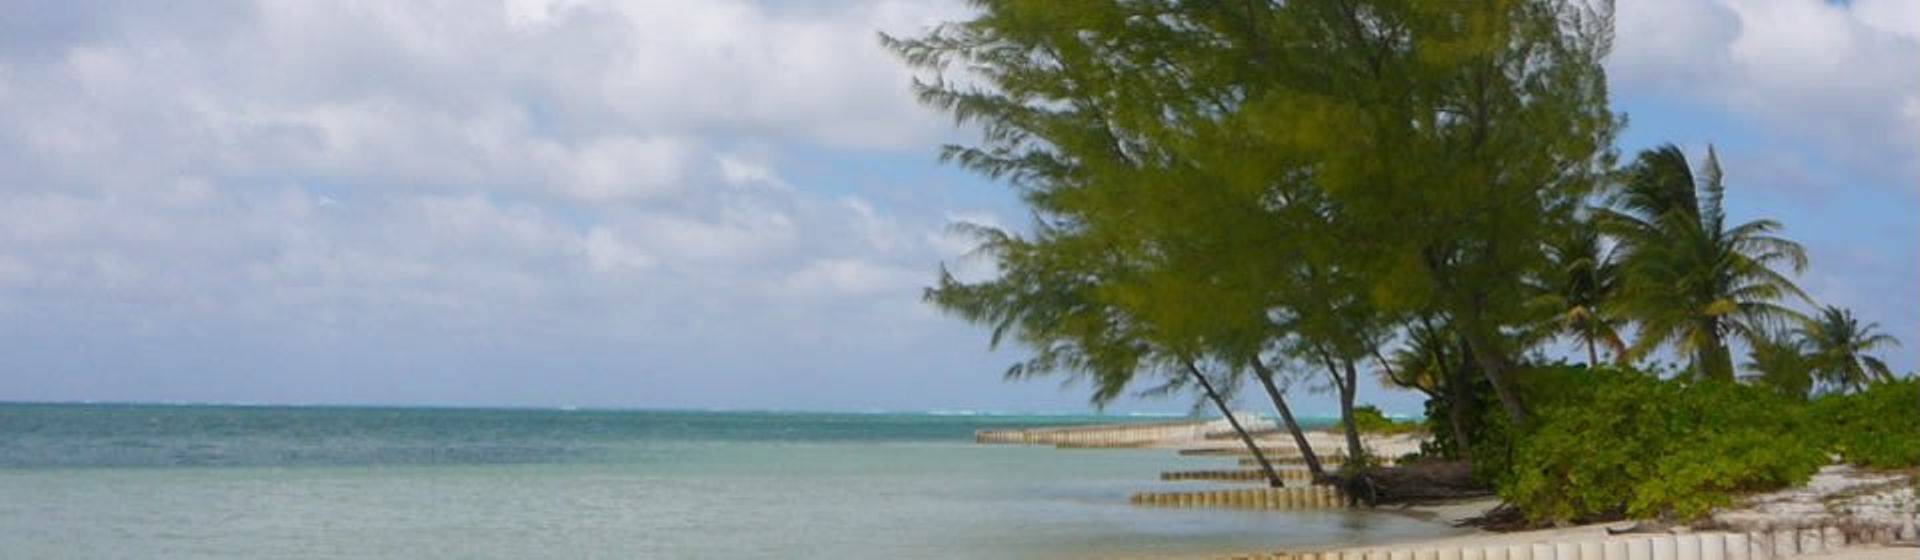 Holidays to Cayman Islands Image